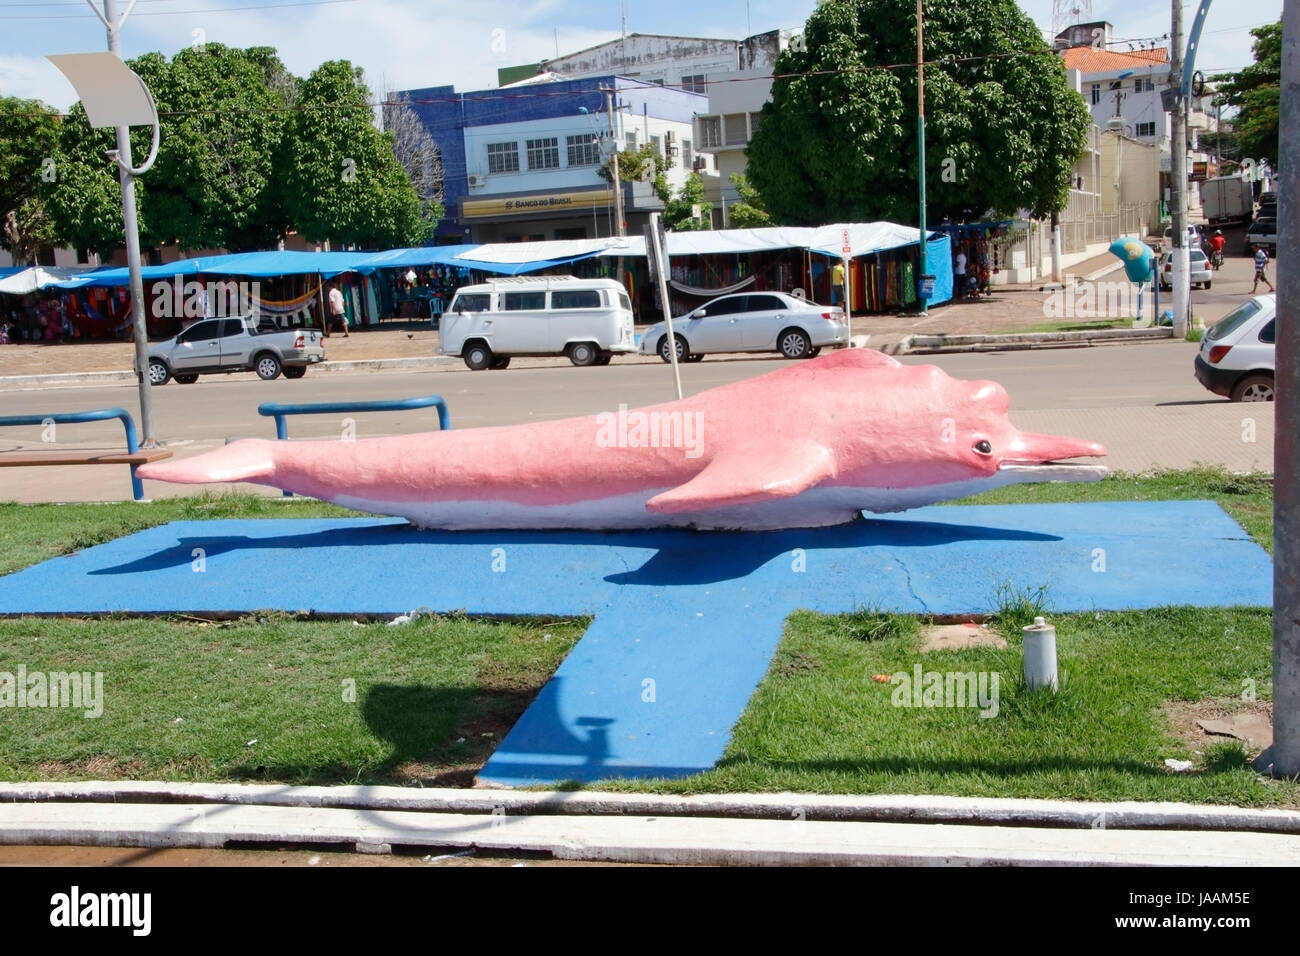 model of Amazon pink river dolphin, on pavement in Santarem, Brazil Stock Photo